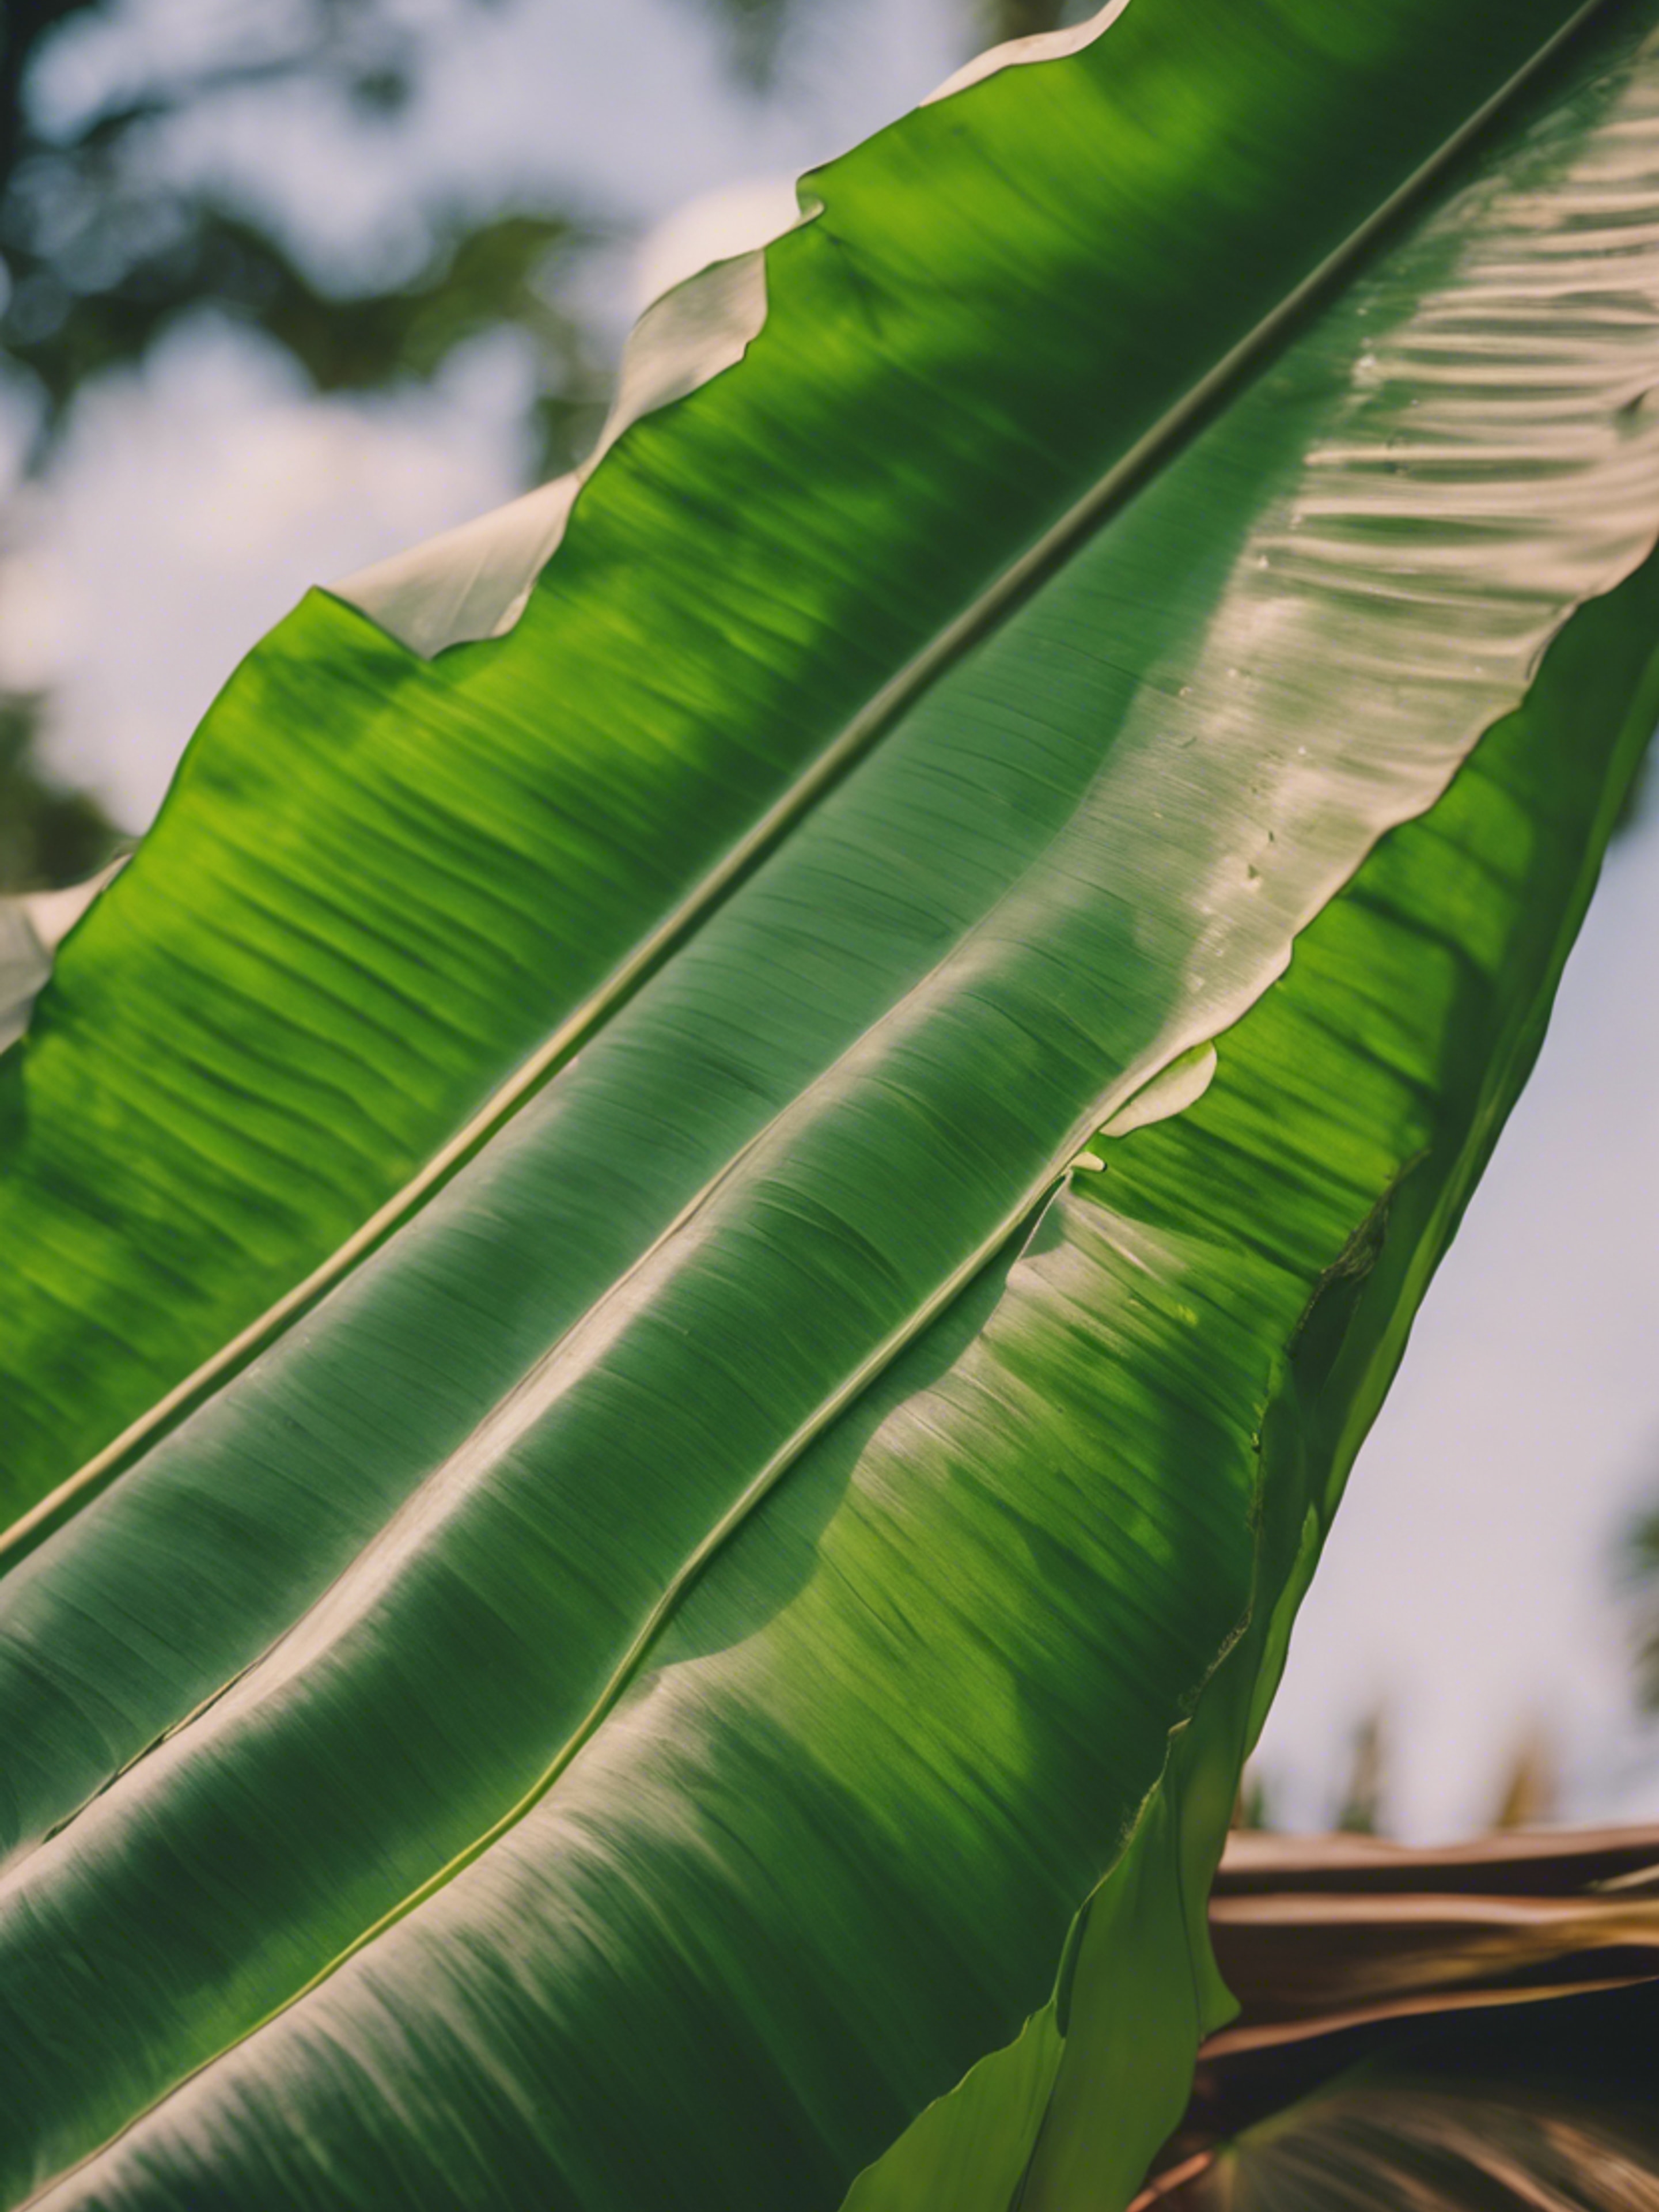 A banana leaf fashioned into a simple but sturdy homemade kite. Wallpaper[67483886efc74c5189dd]